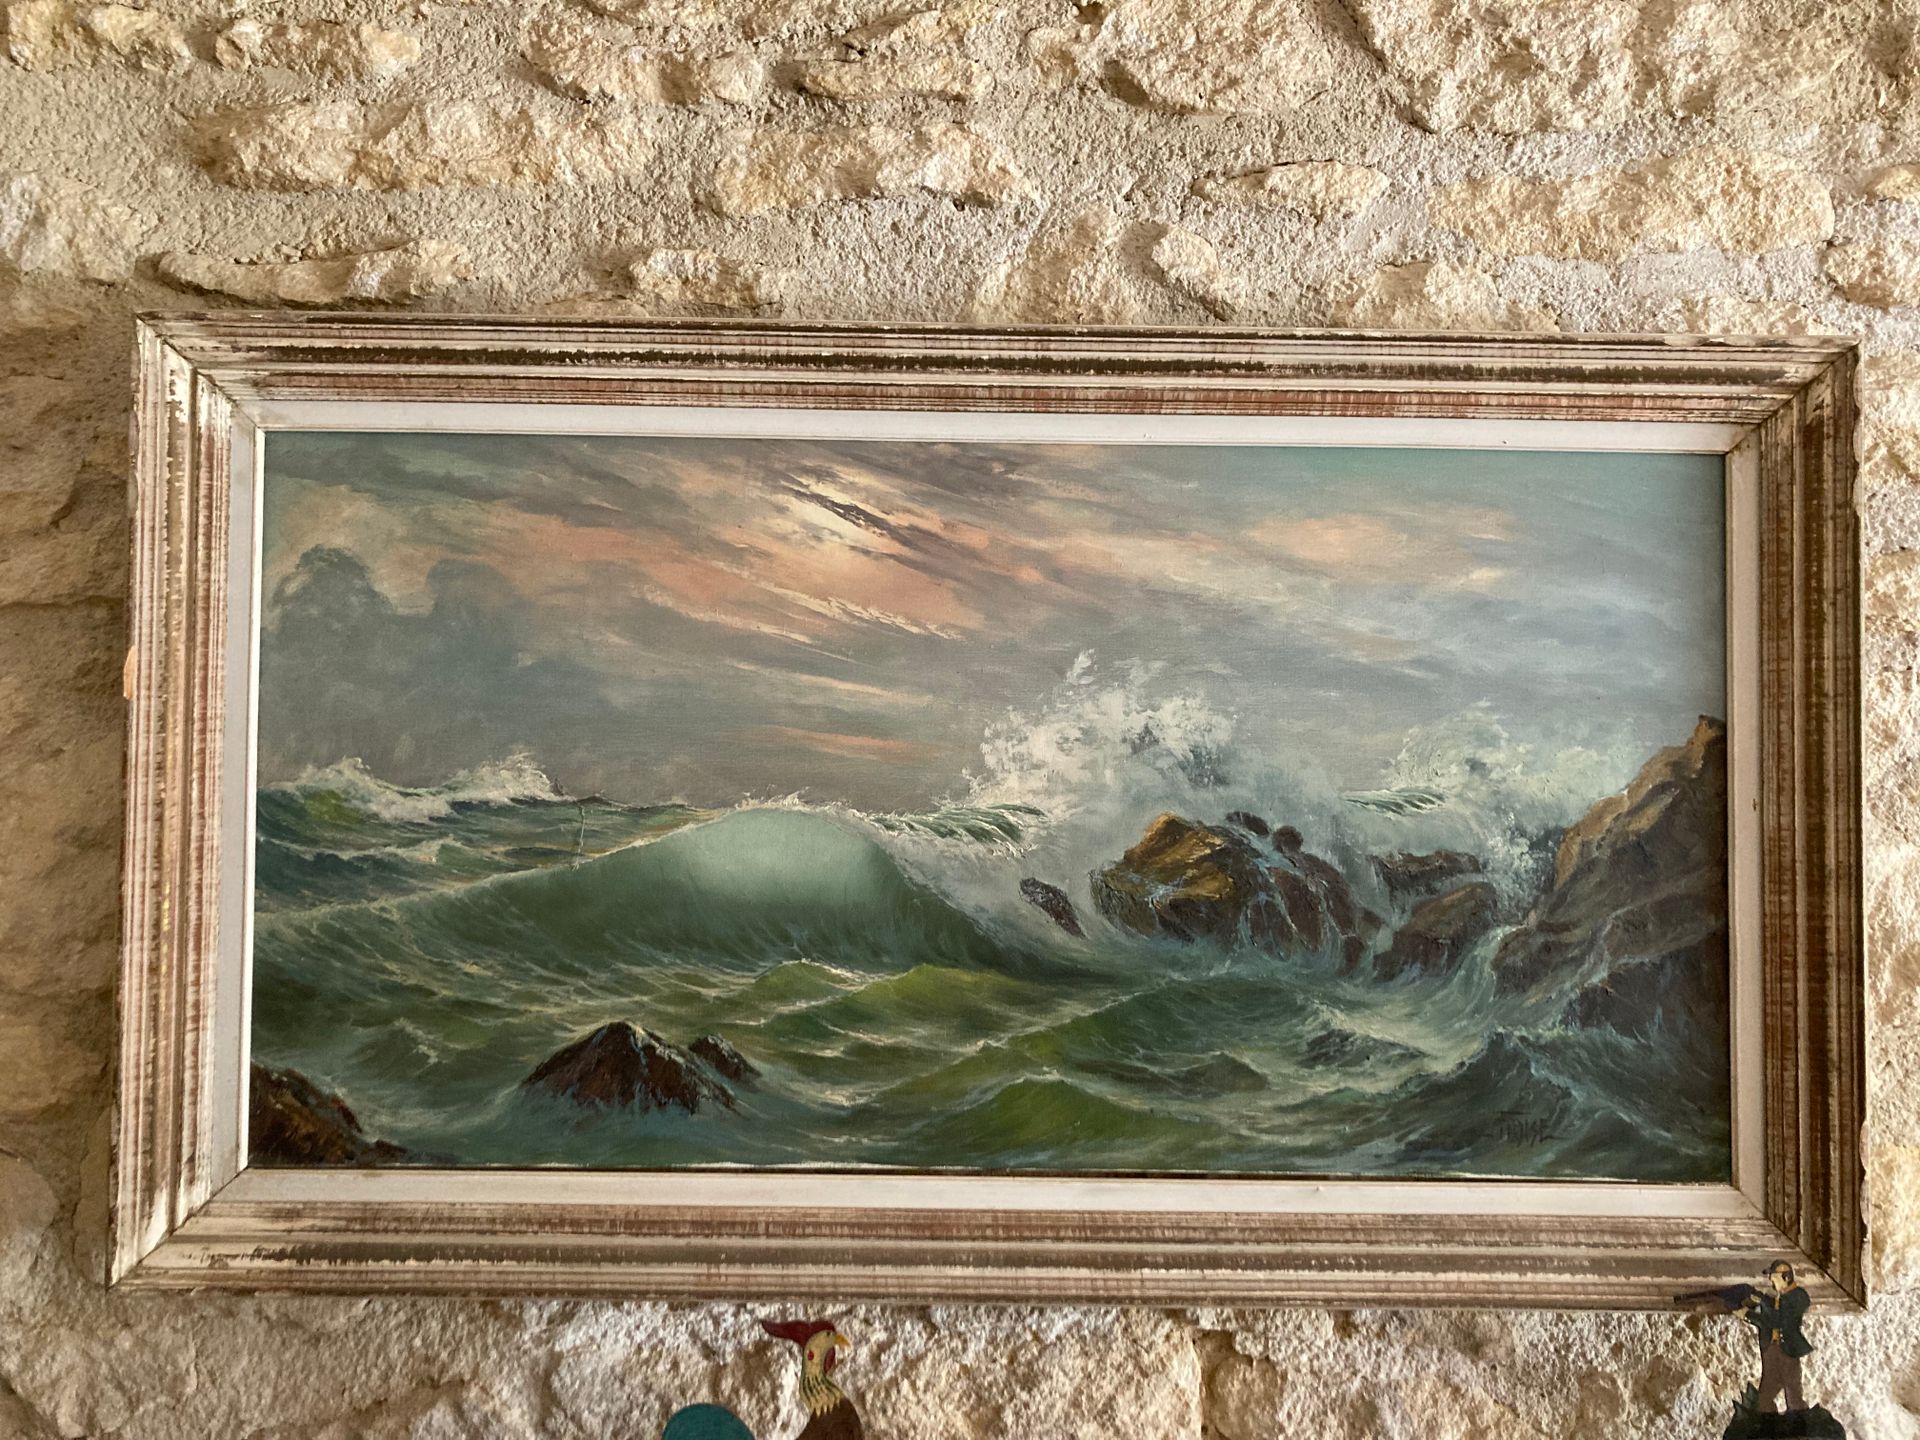 Null French school. 20th century
Marine
Oil on canvas. 
59x119 cm